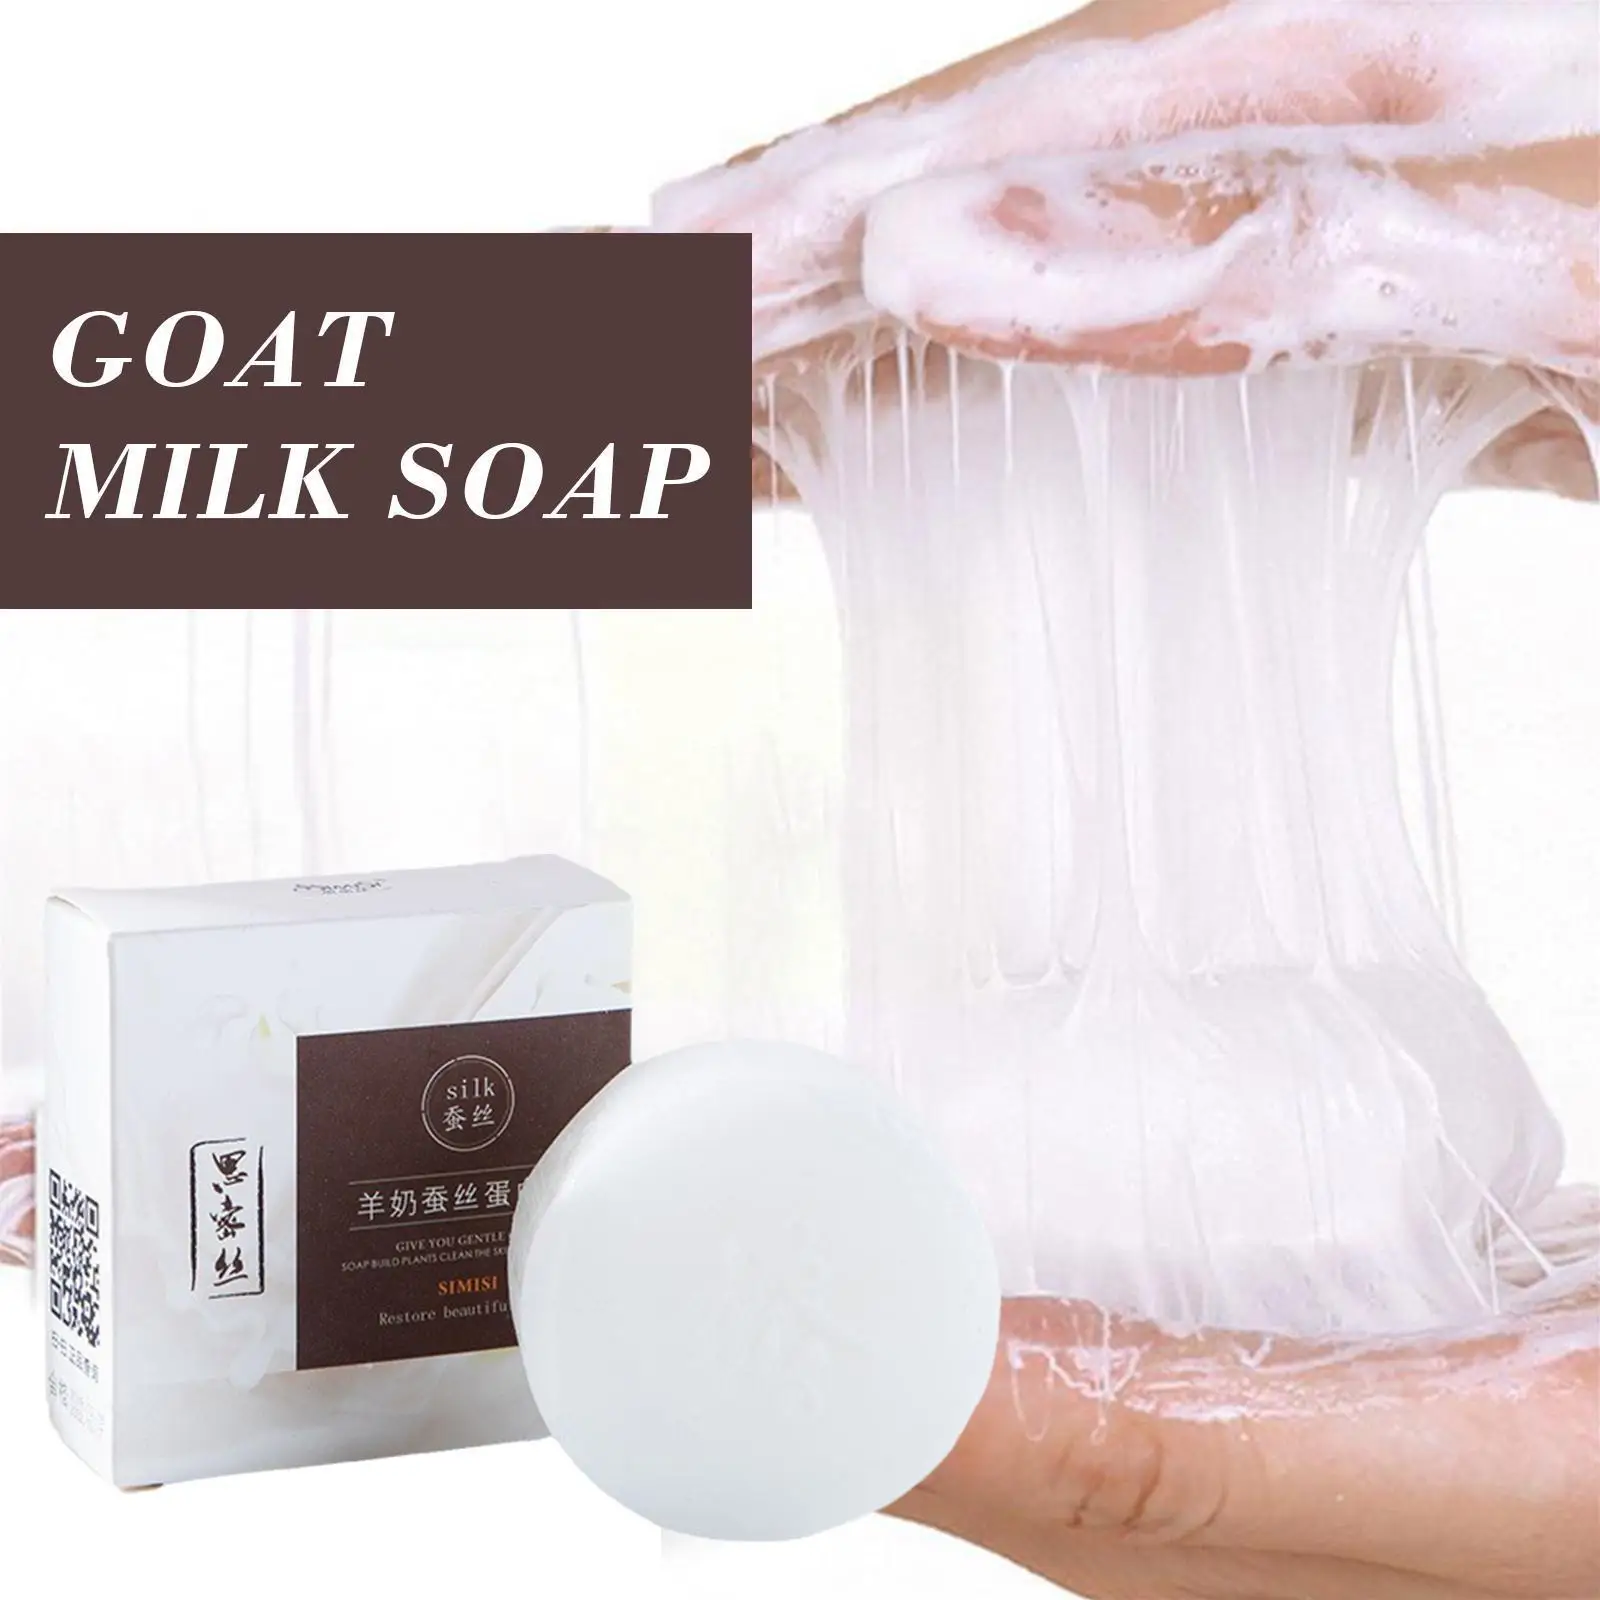 

Goat Milk Soap Original Wholesale Handmade Soap Rice Milk Whitening Soap Goat Milk Soap Protein Soap For Whitening Facial S D7Q9